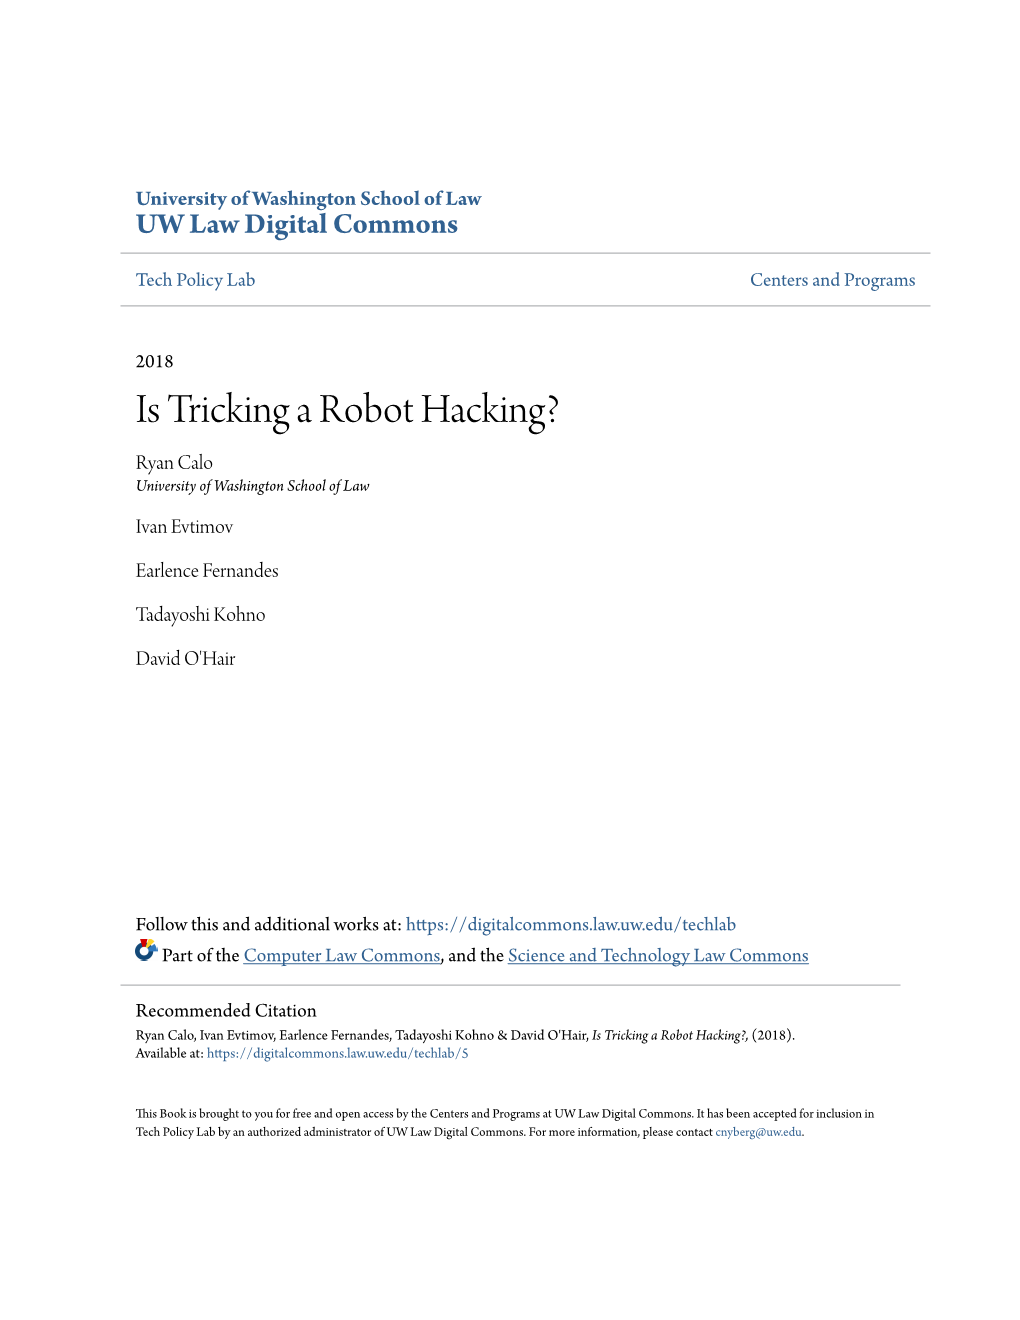 Is Tricking a Robot Hacking? Ryan Calo University of Washington School of Law